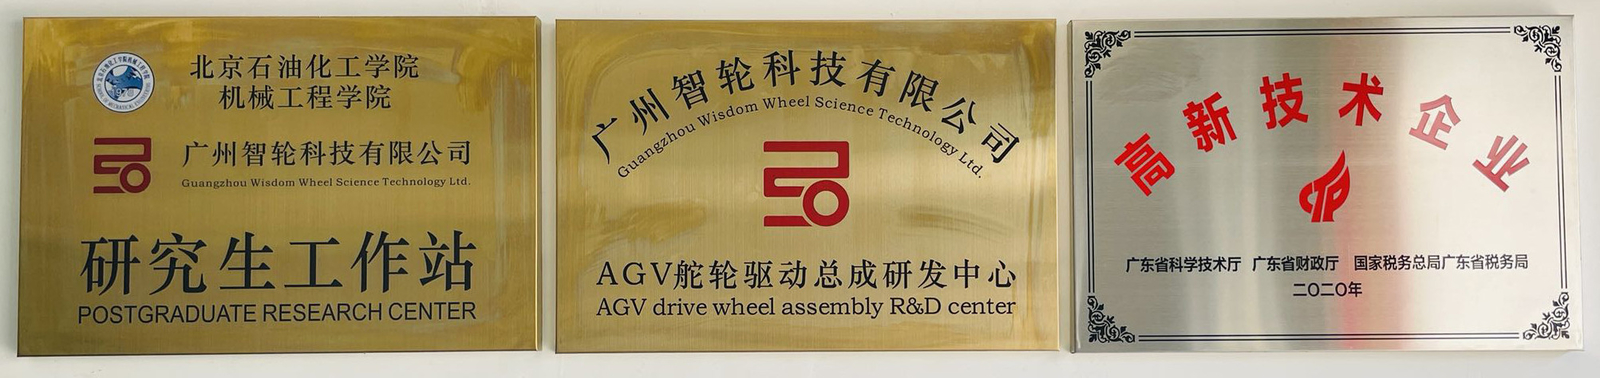 Guangzhou Wisdom Wheel Science Technology Ltd. línea de producción de fábrica